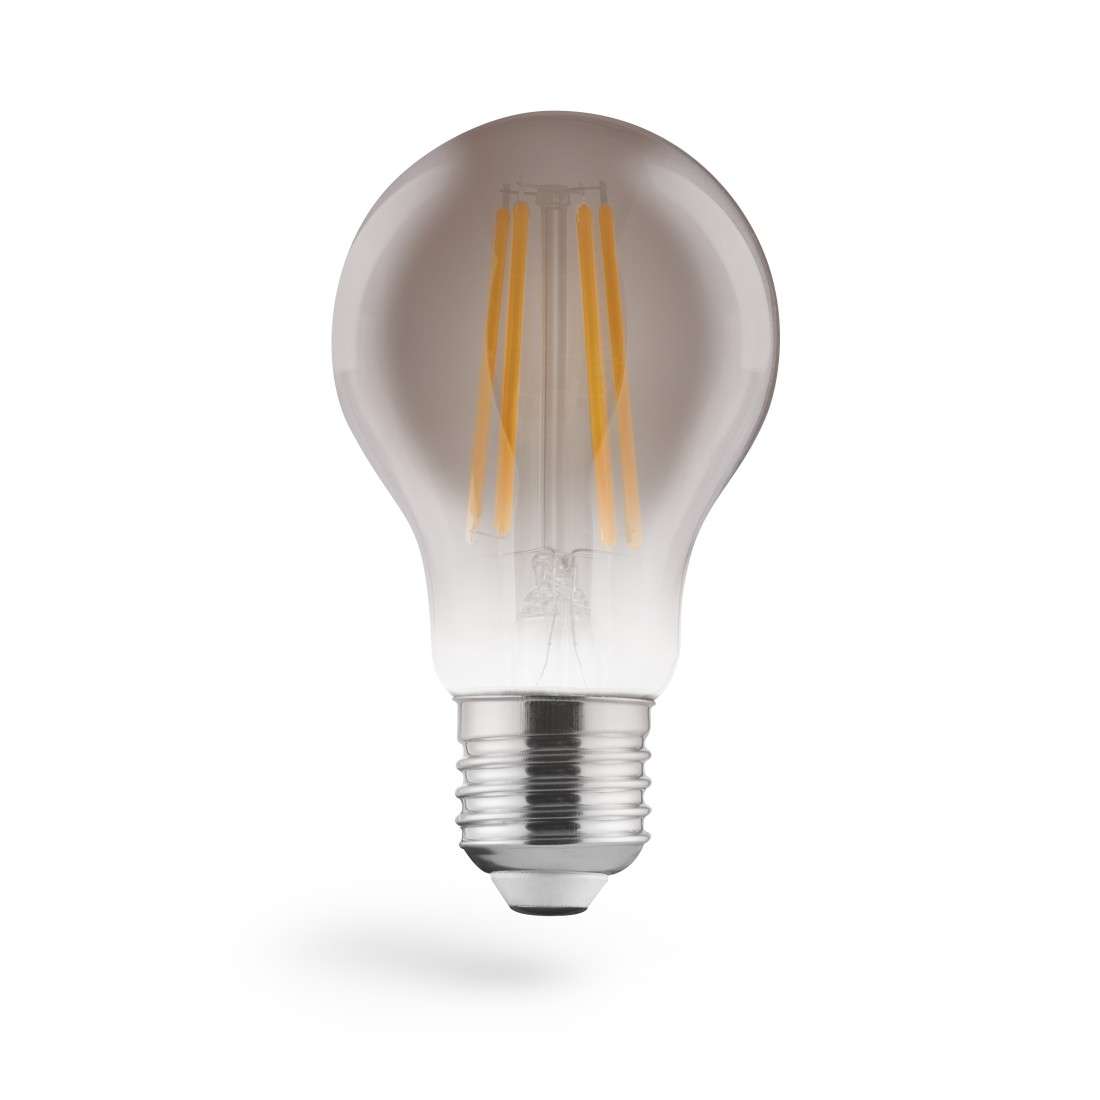 XAVAX LED-Filament, E27, 380lm 8W, Vintage-Lampe Glühlampe, dimmbar, Warmweiß